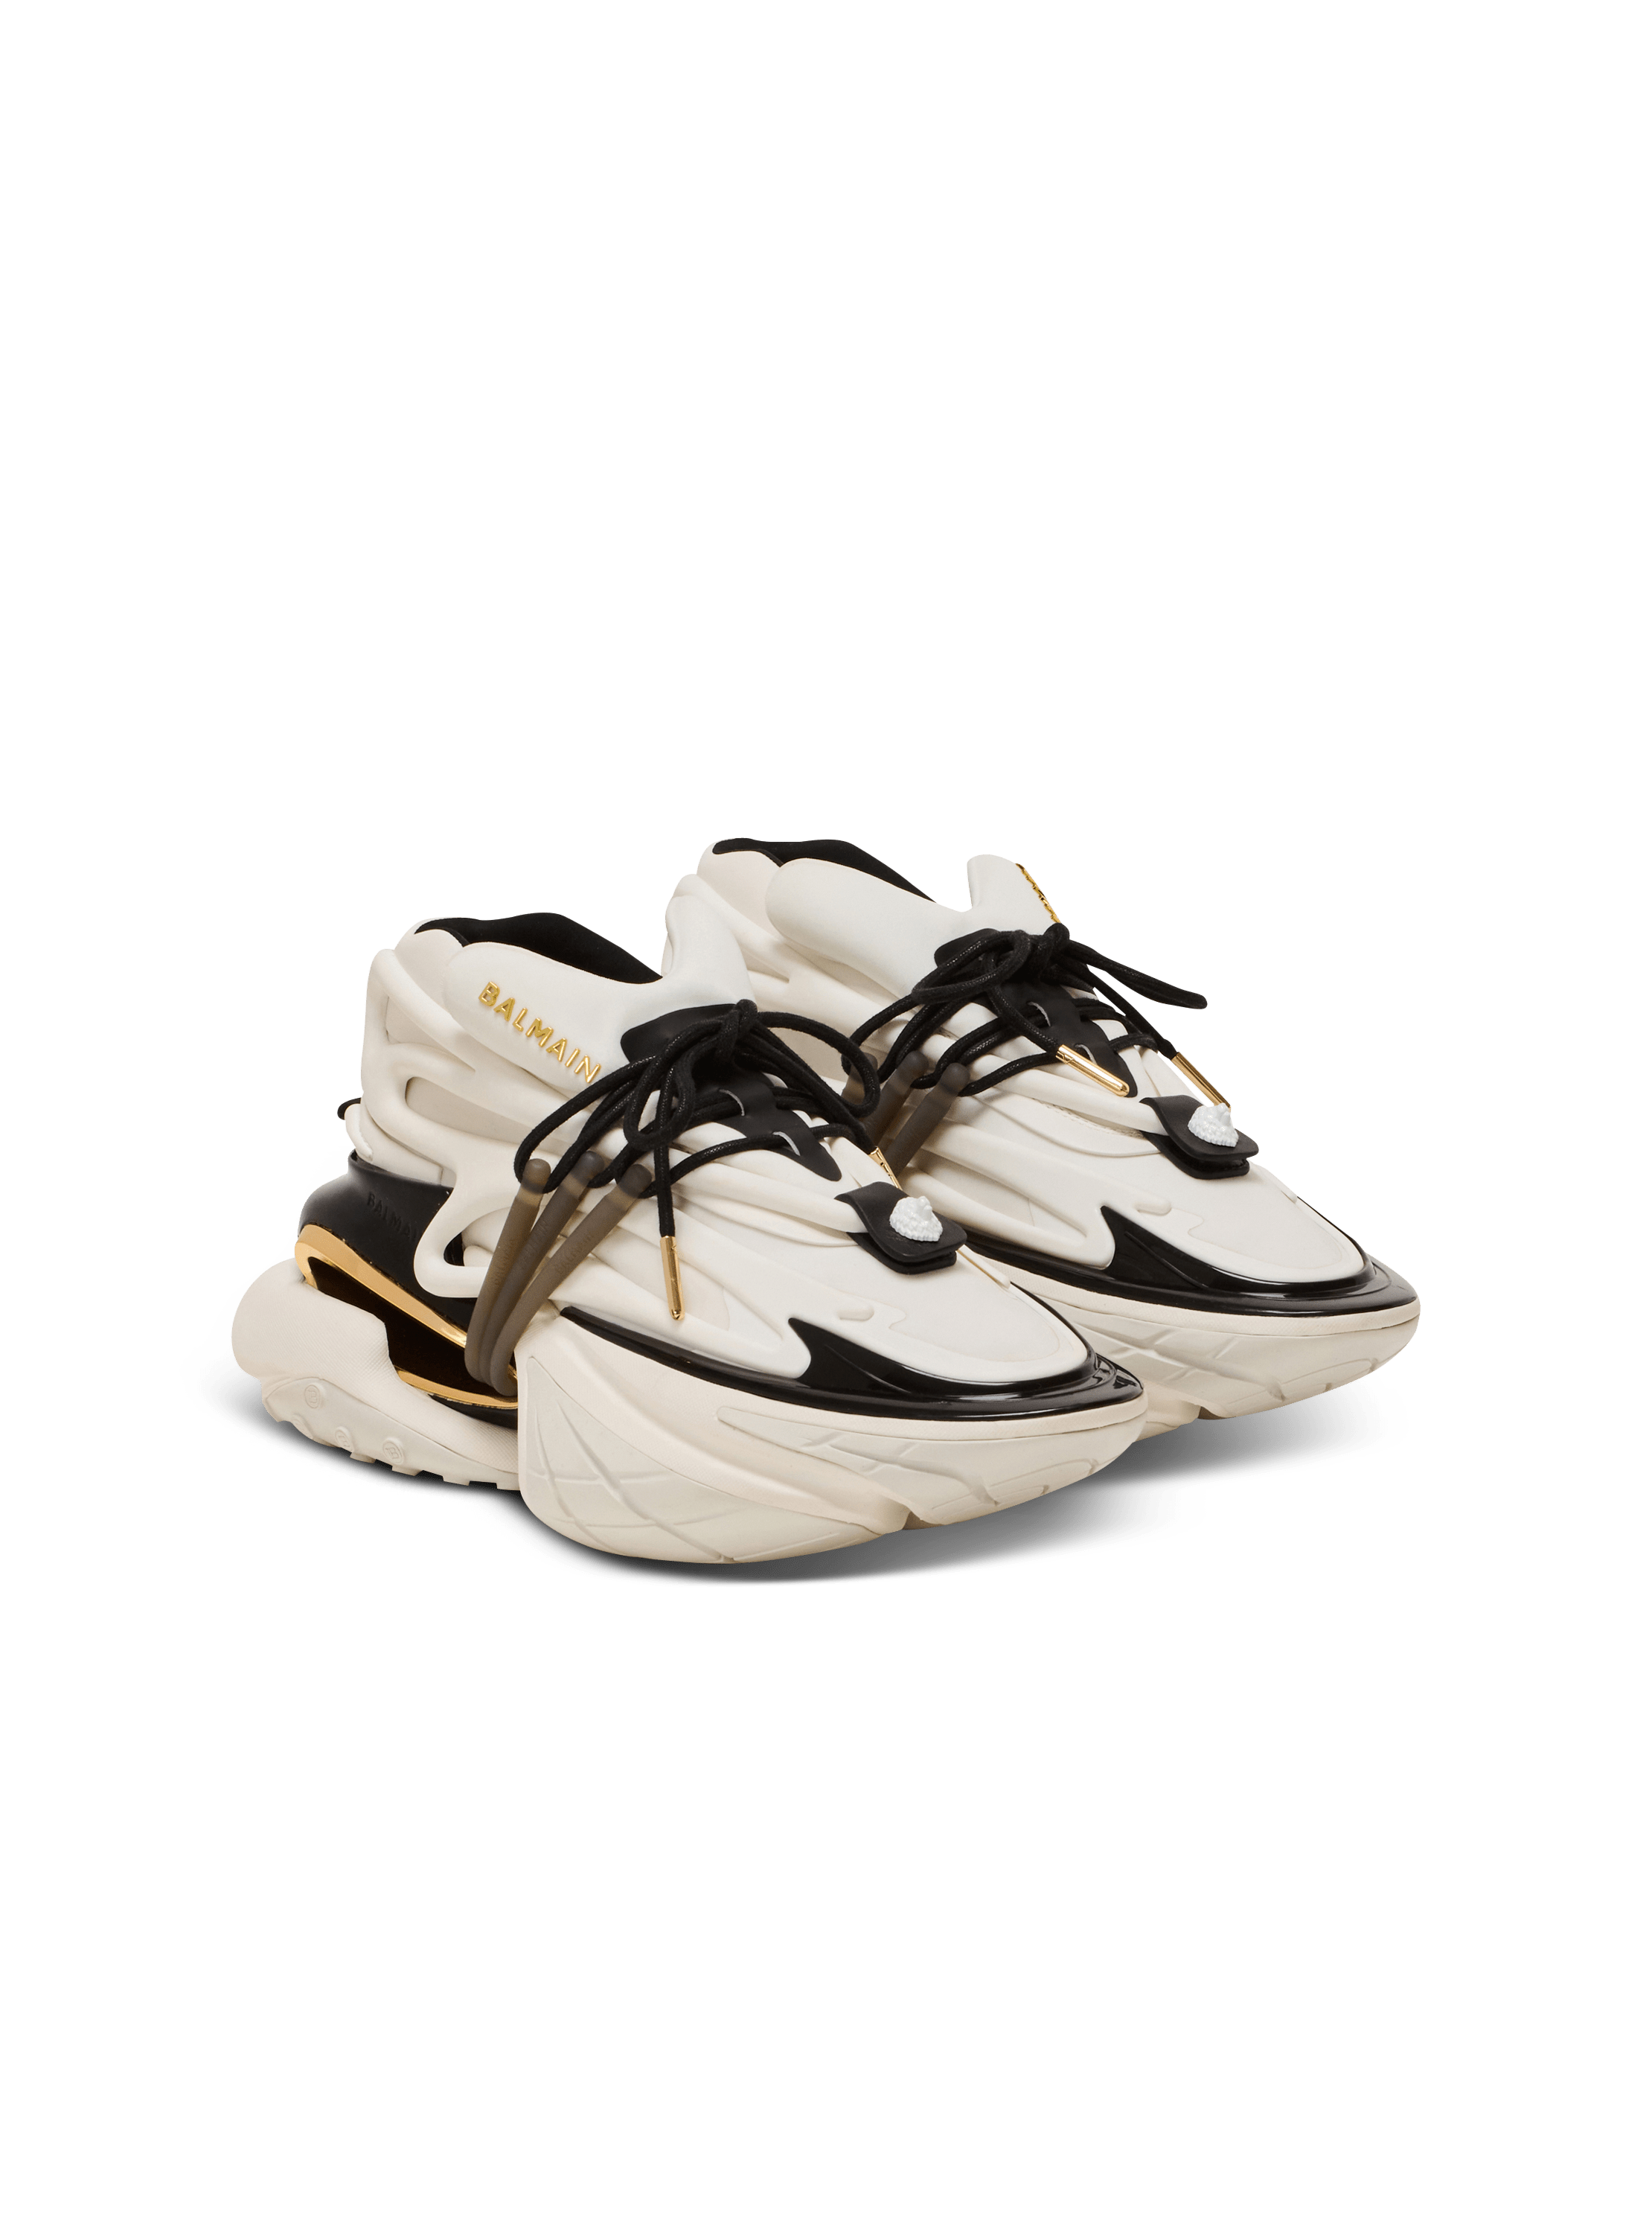 Unicorn Low sneakers in neoprene and calfskin